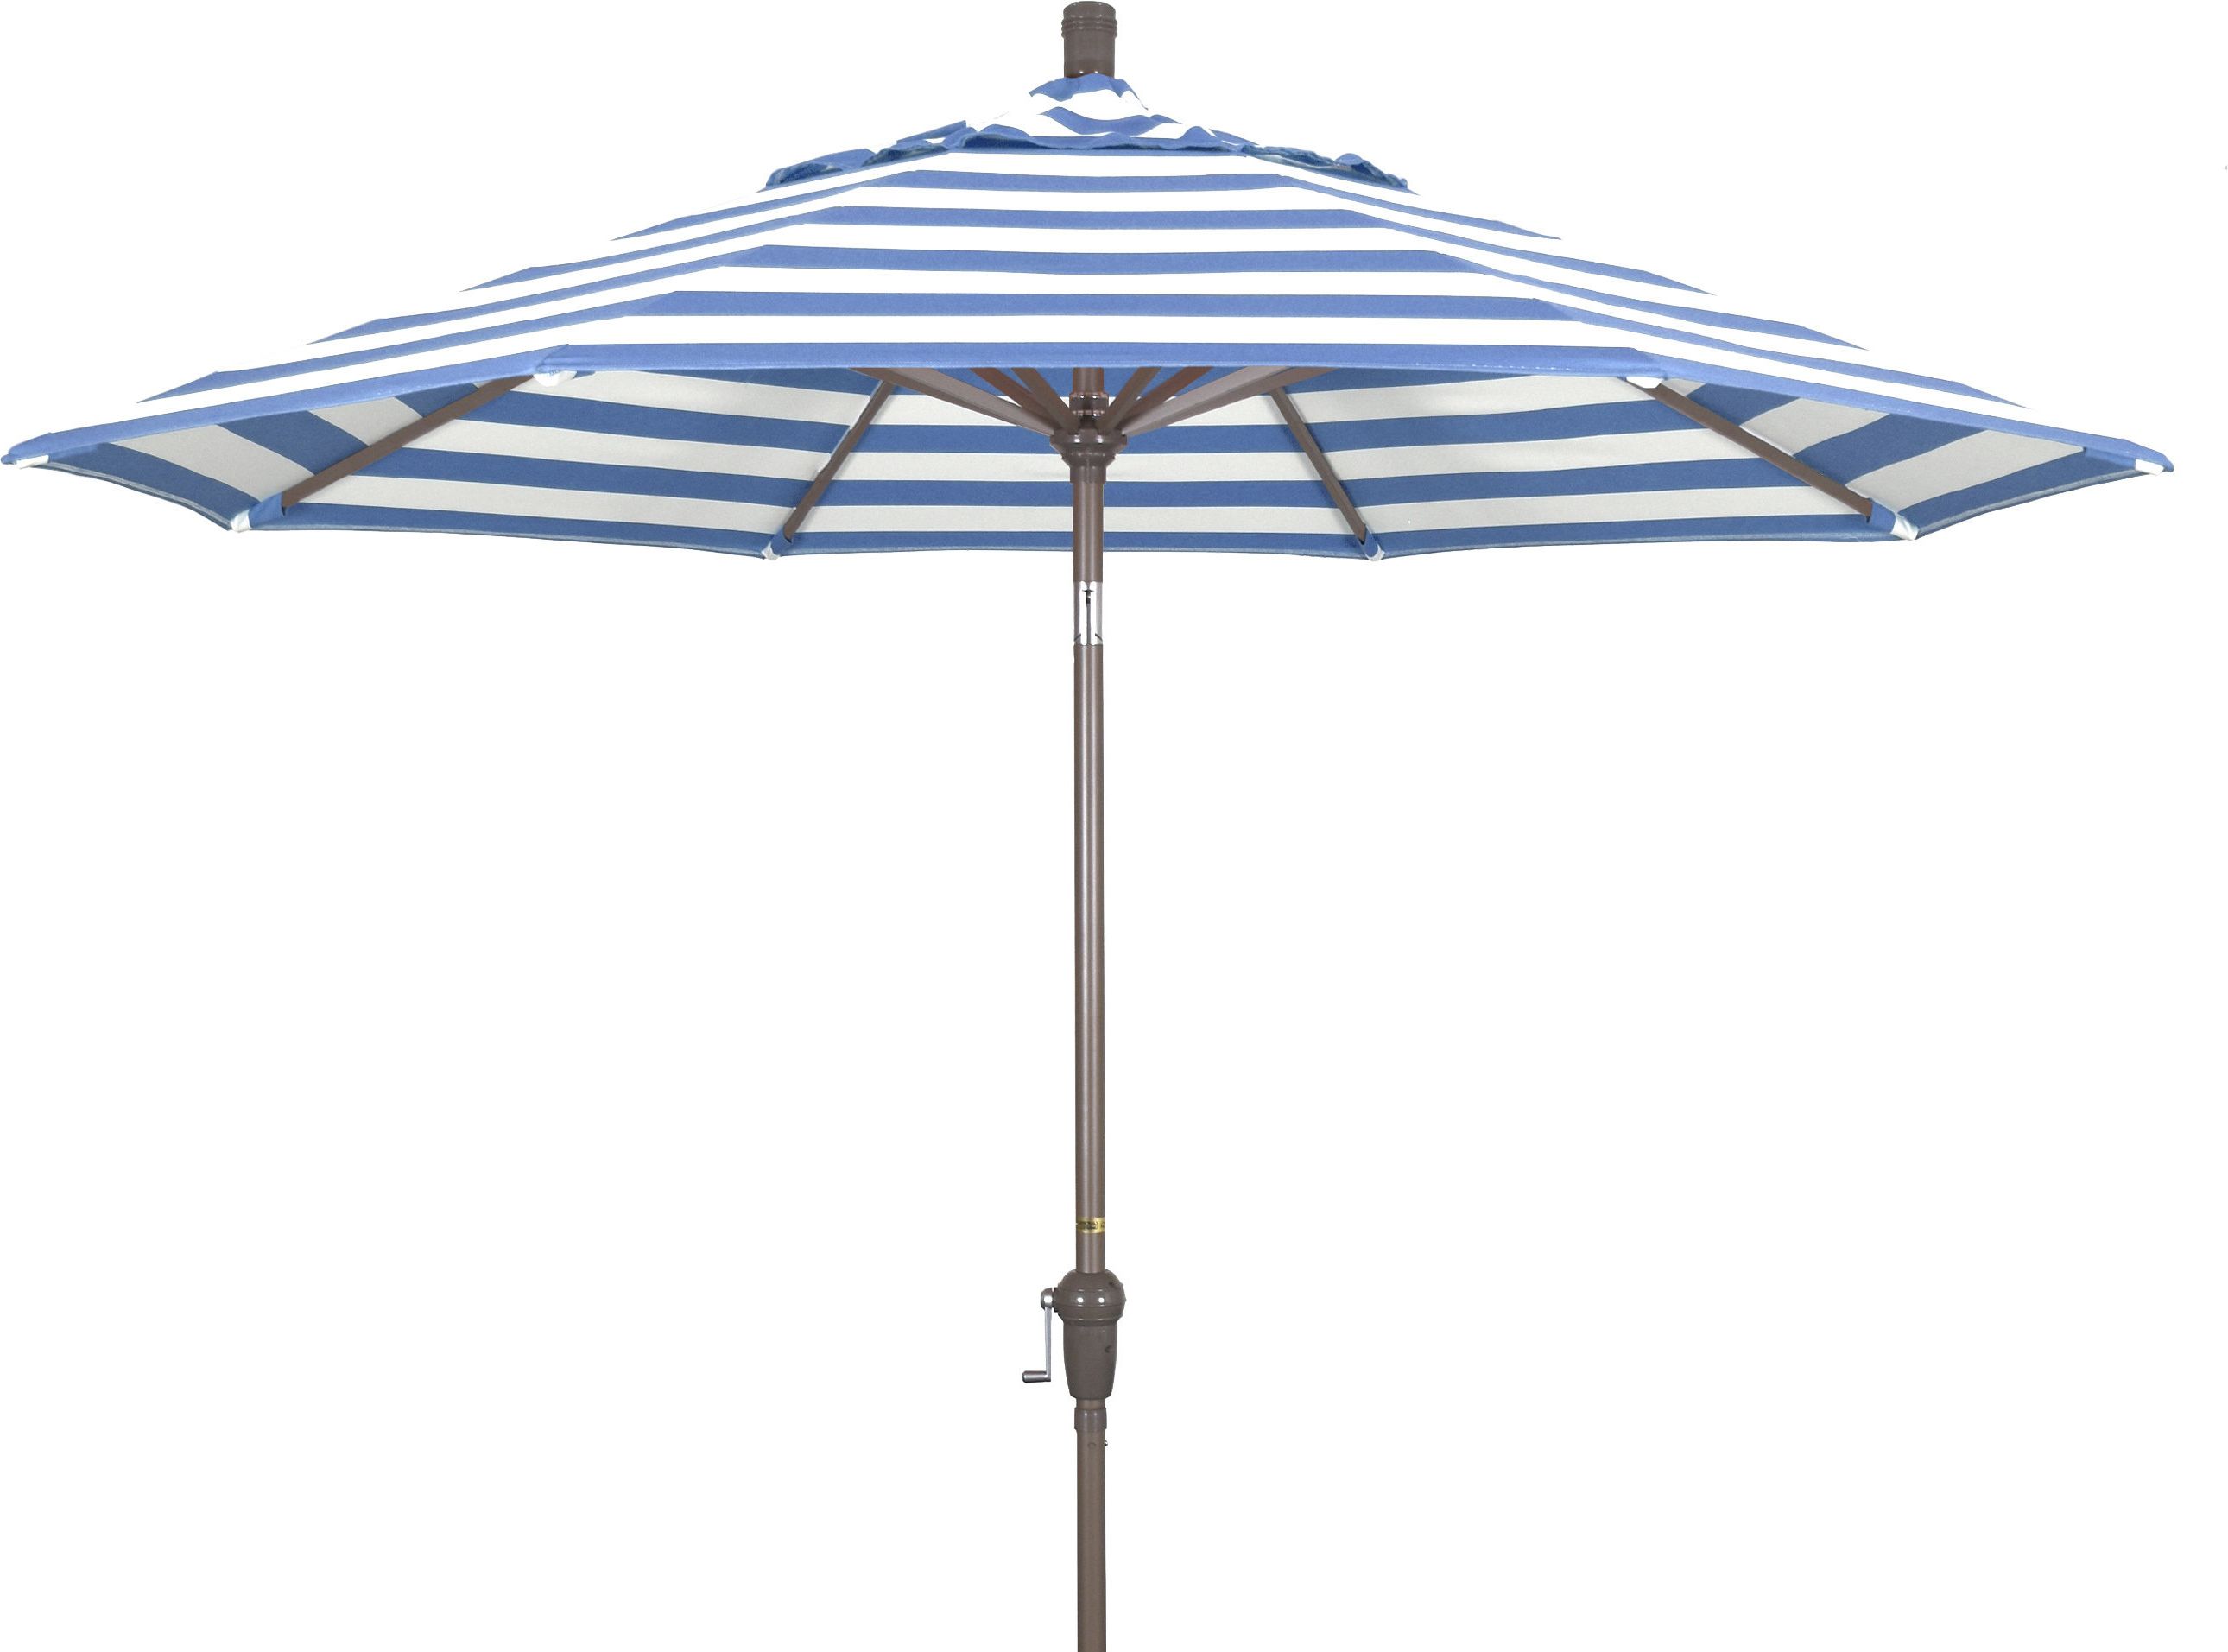 9' Market Sunbrella Umbrella Intended For Widely Used Caravelle Market Sunbrella Umbrellas (Photo 15 of 20)